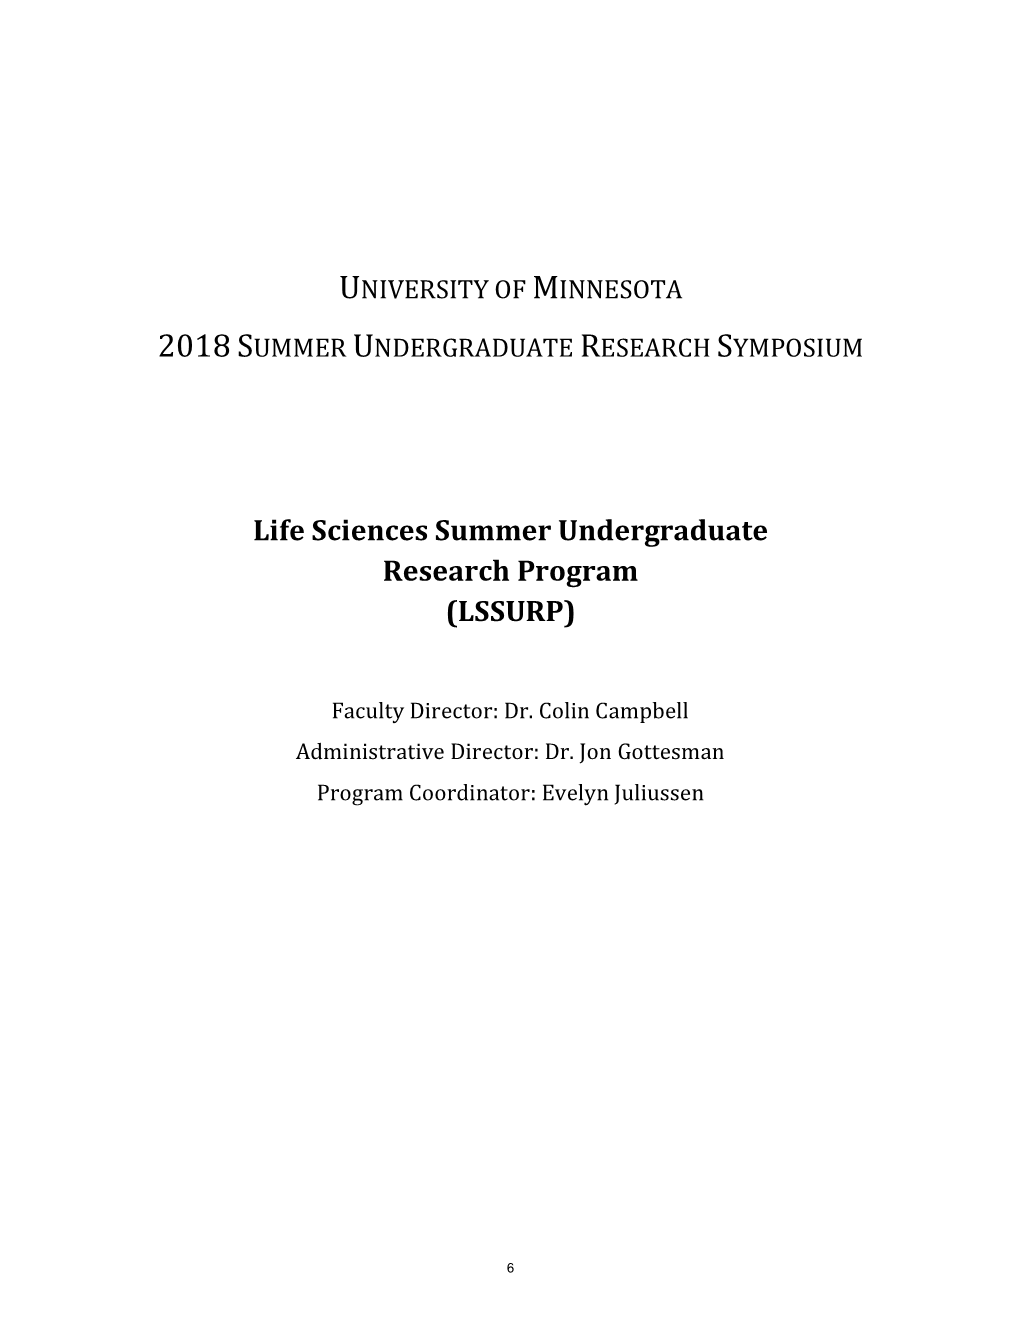 Life Sciences Summer Undergraduate Research Program (LSSURP)